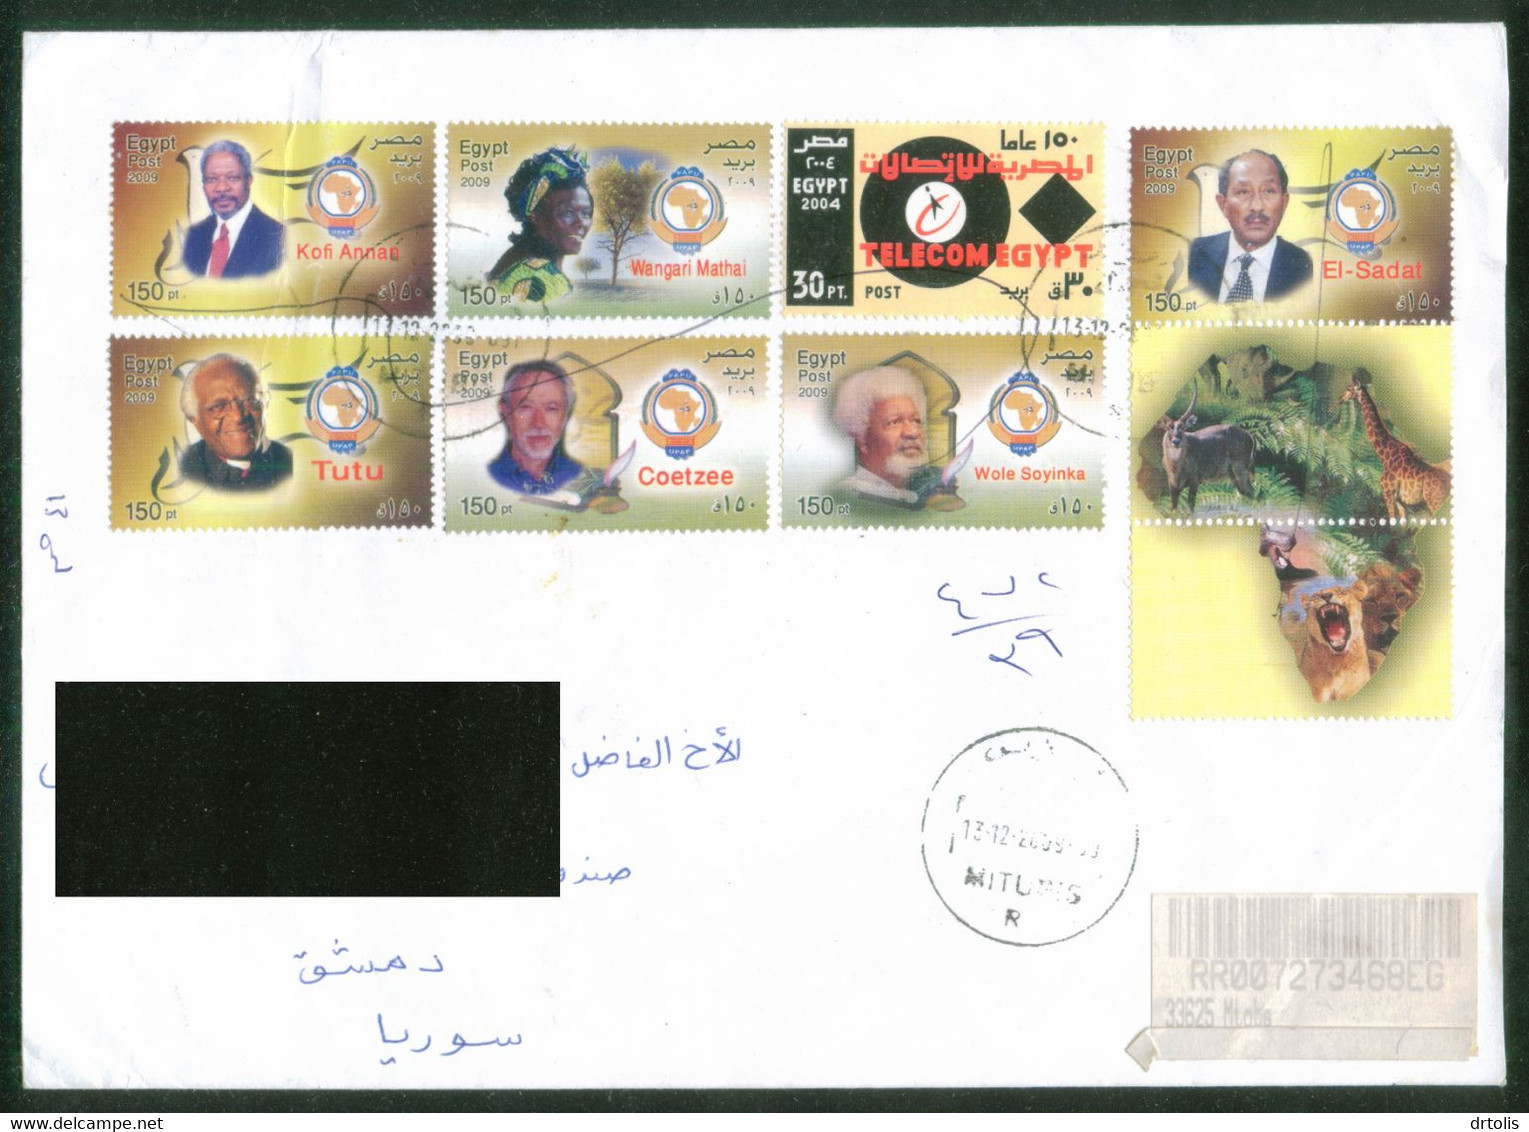 EGYPT / SYRIA / 2004 / THE WITHDRAWN TELECOM STAMP ON COVER TO SYRIA - Briefe U. Dokumente